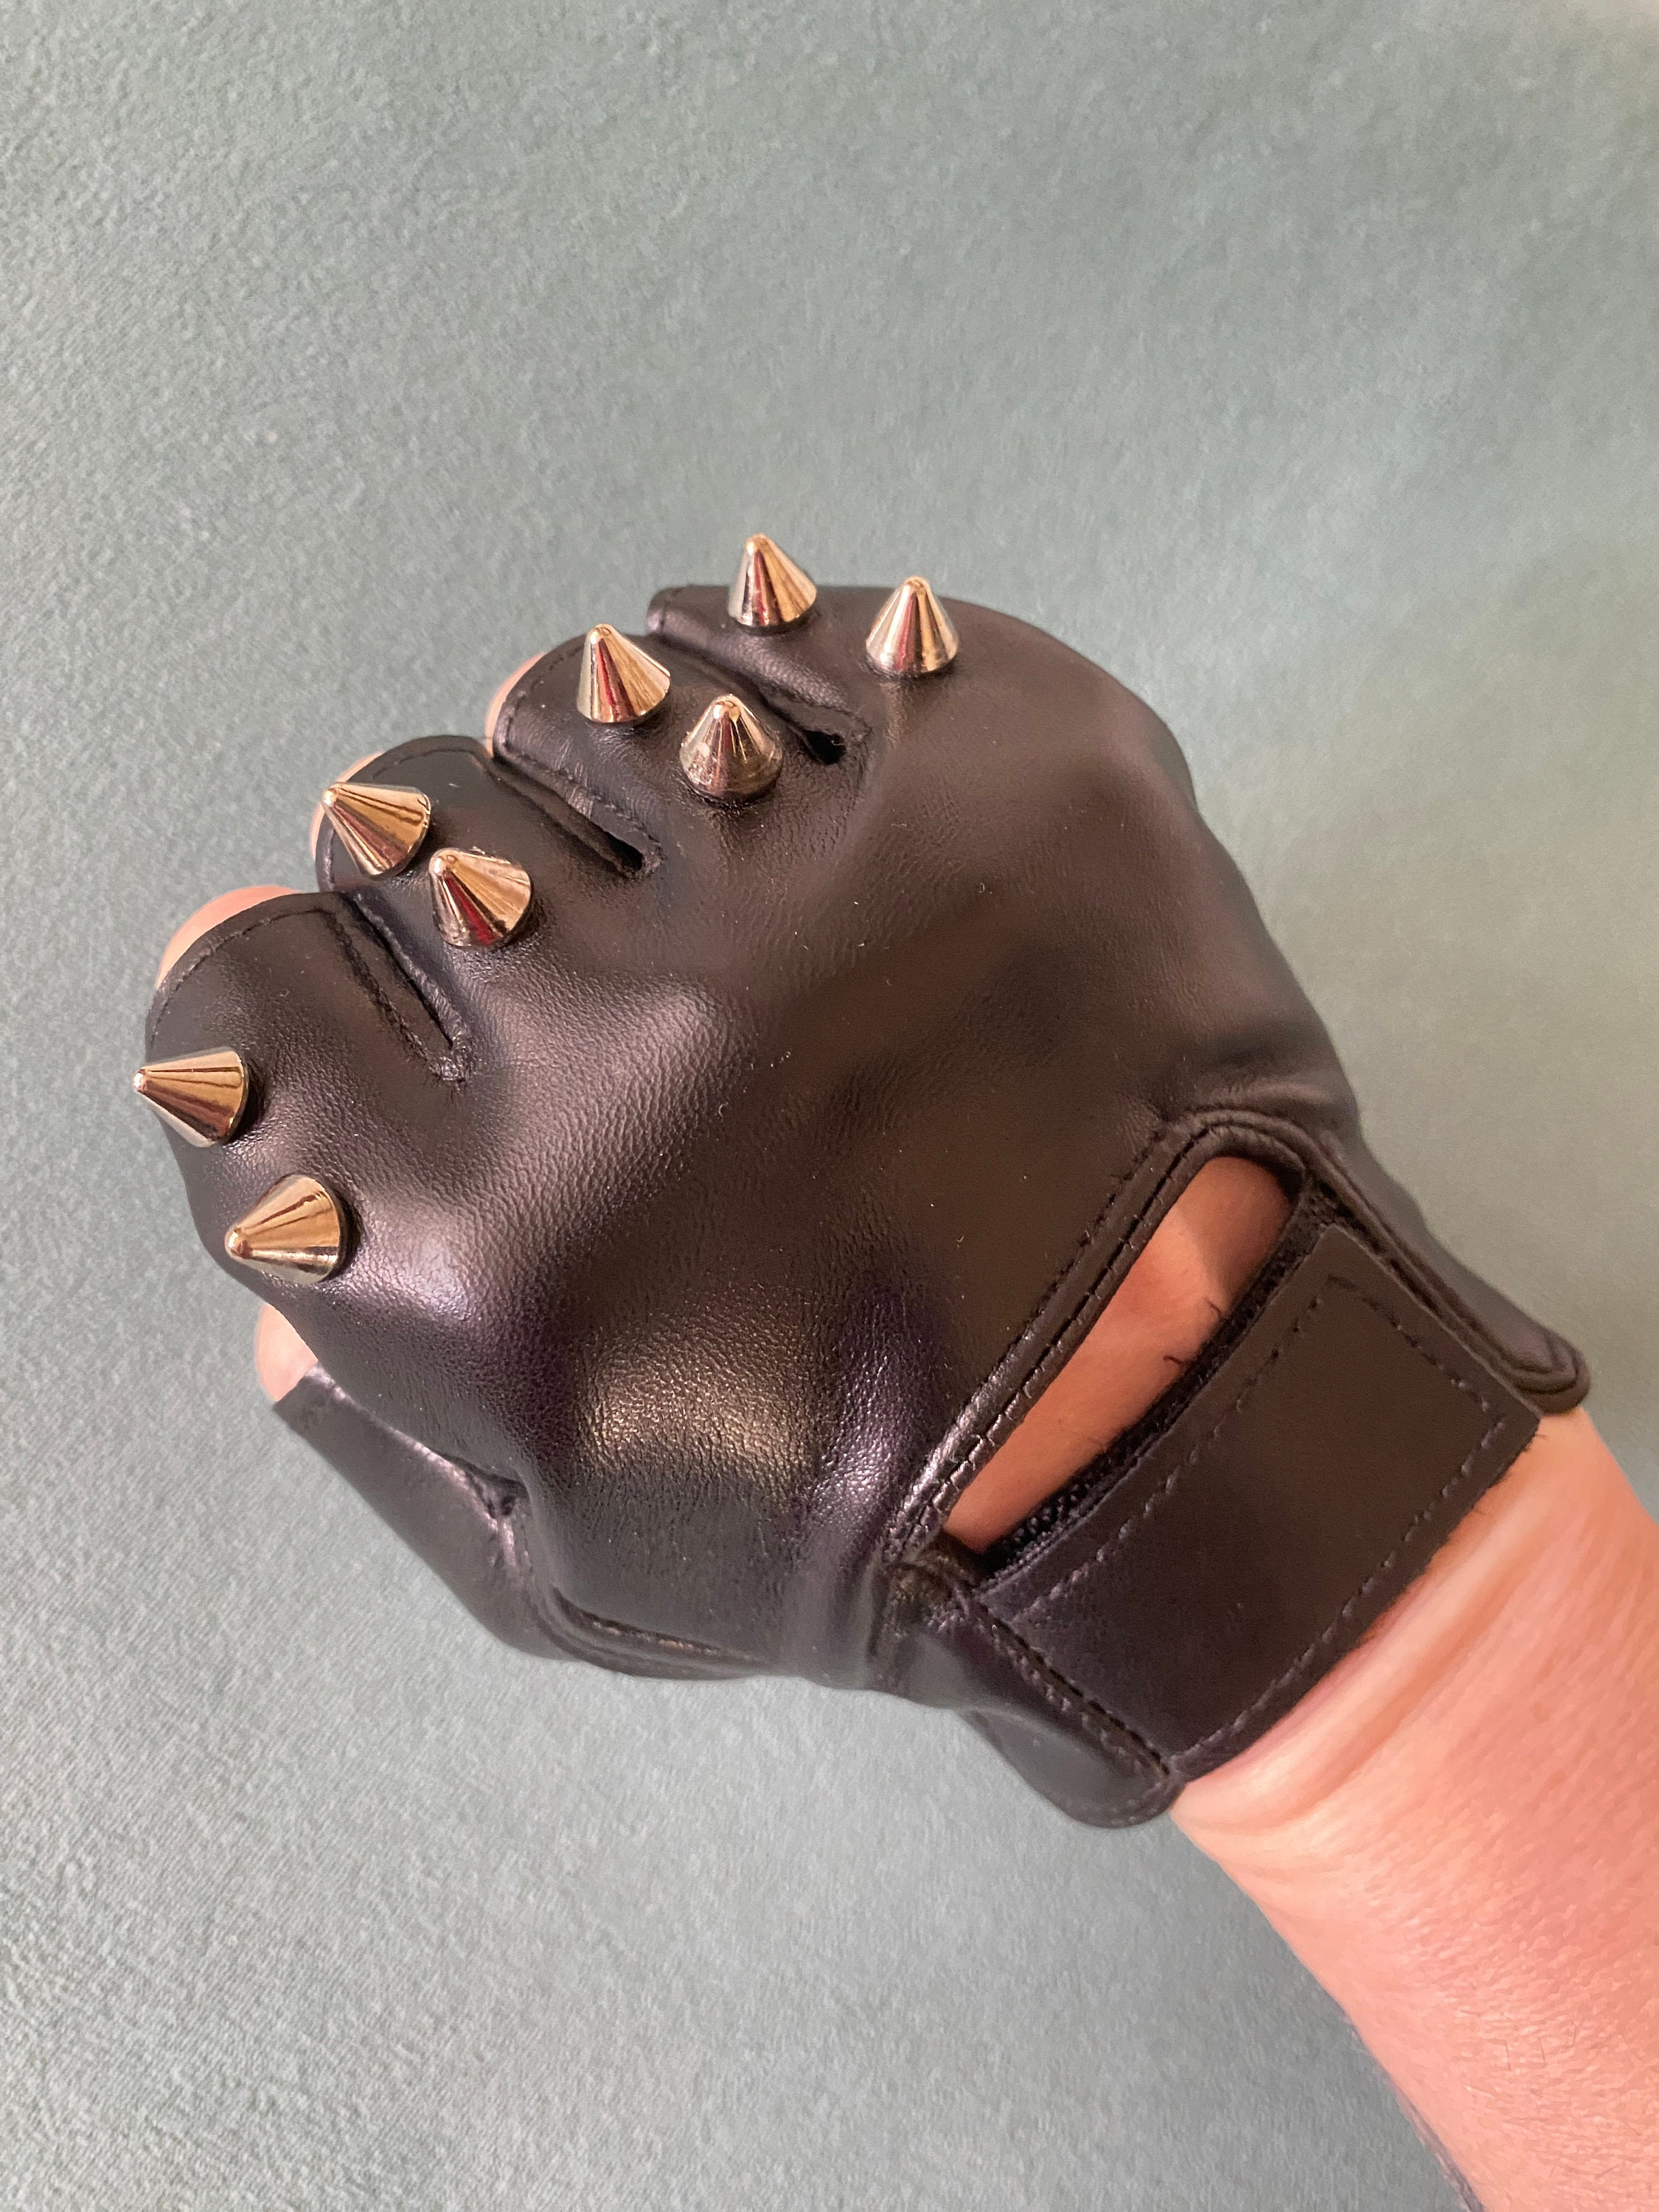 KINBOM 1 Pair Half Finger Leather Gloves, Stylish Fingerless Leather Gloves  with Rhinestone Biker Punk Gloves for Halloween Women Girls Cosplay